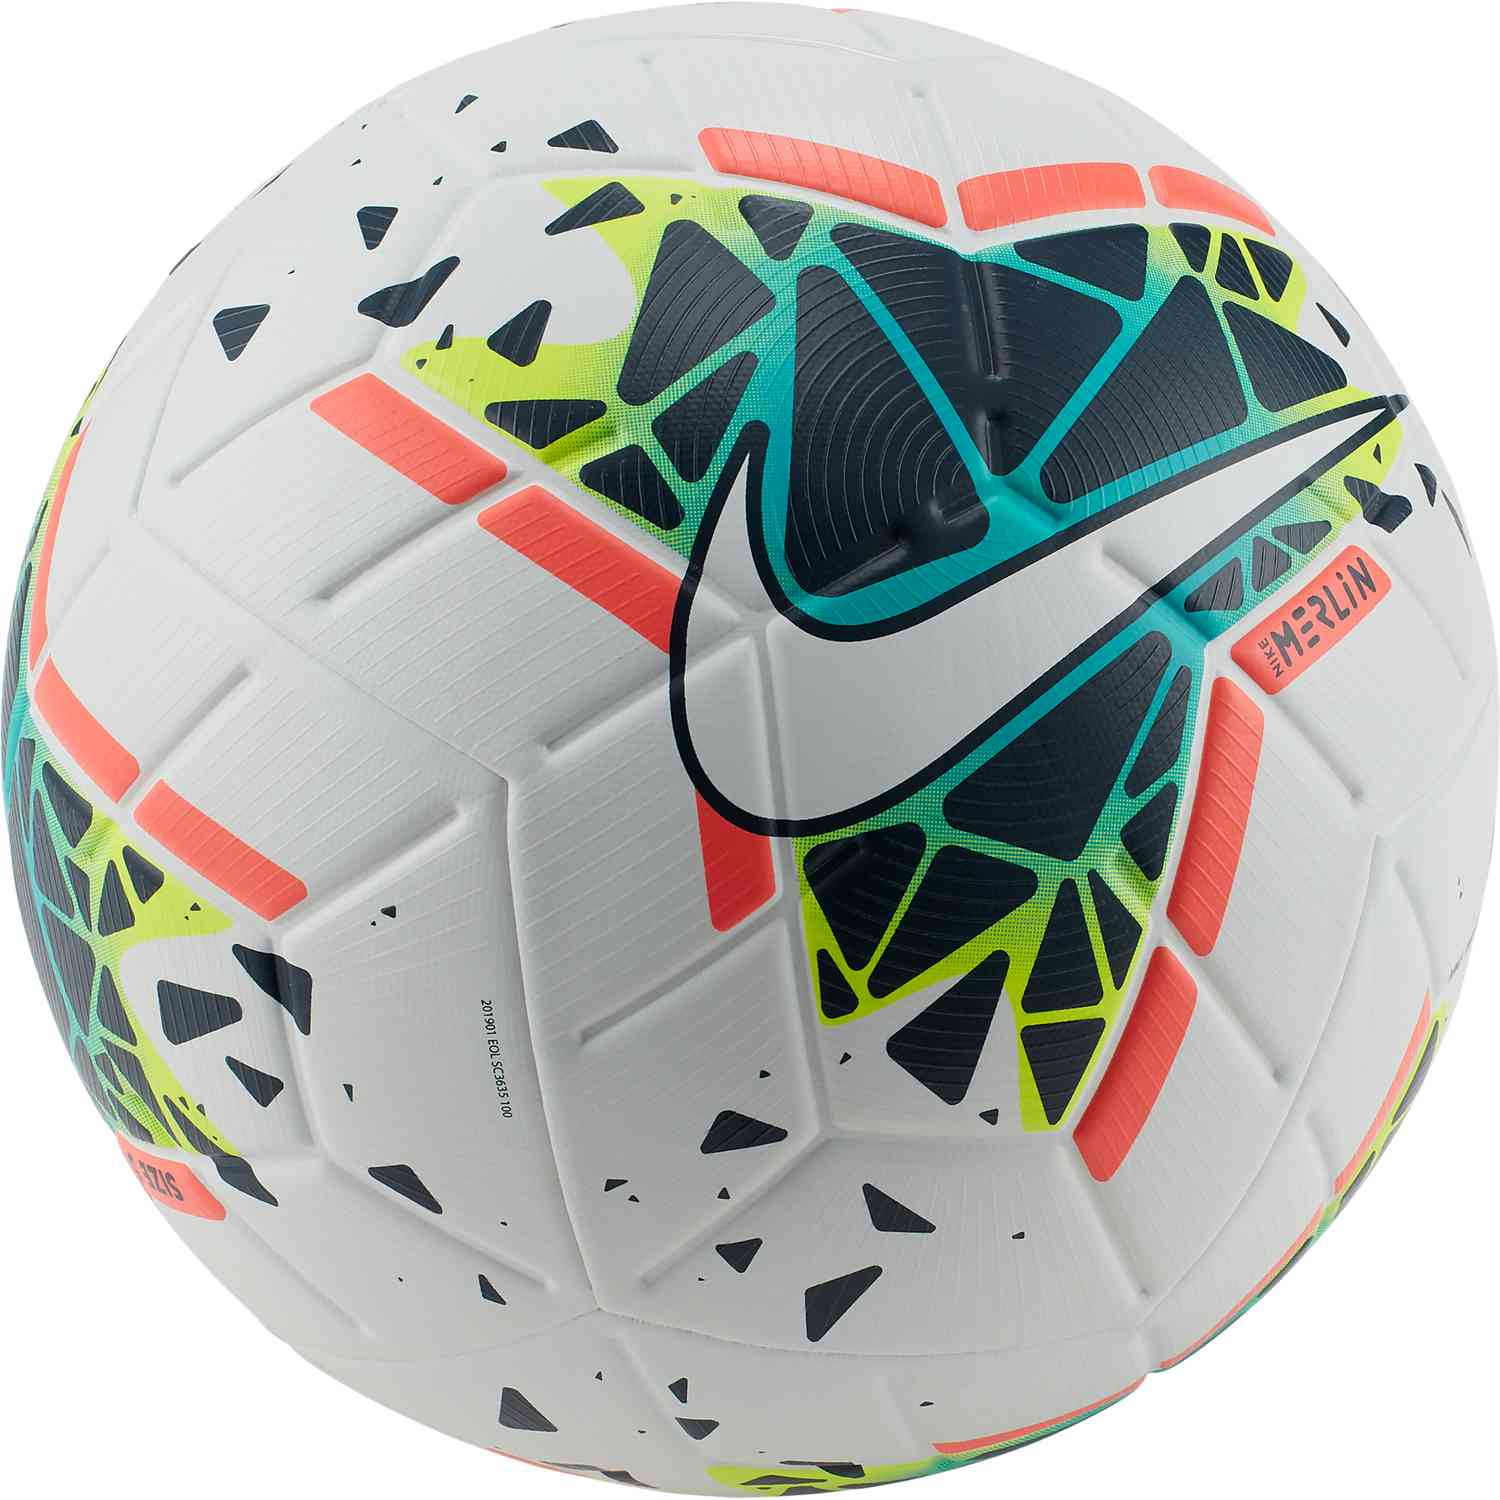 Nike Merlin Premium Match Soccer Ball - White/Obsidian/Blue Fury - SoccerPro